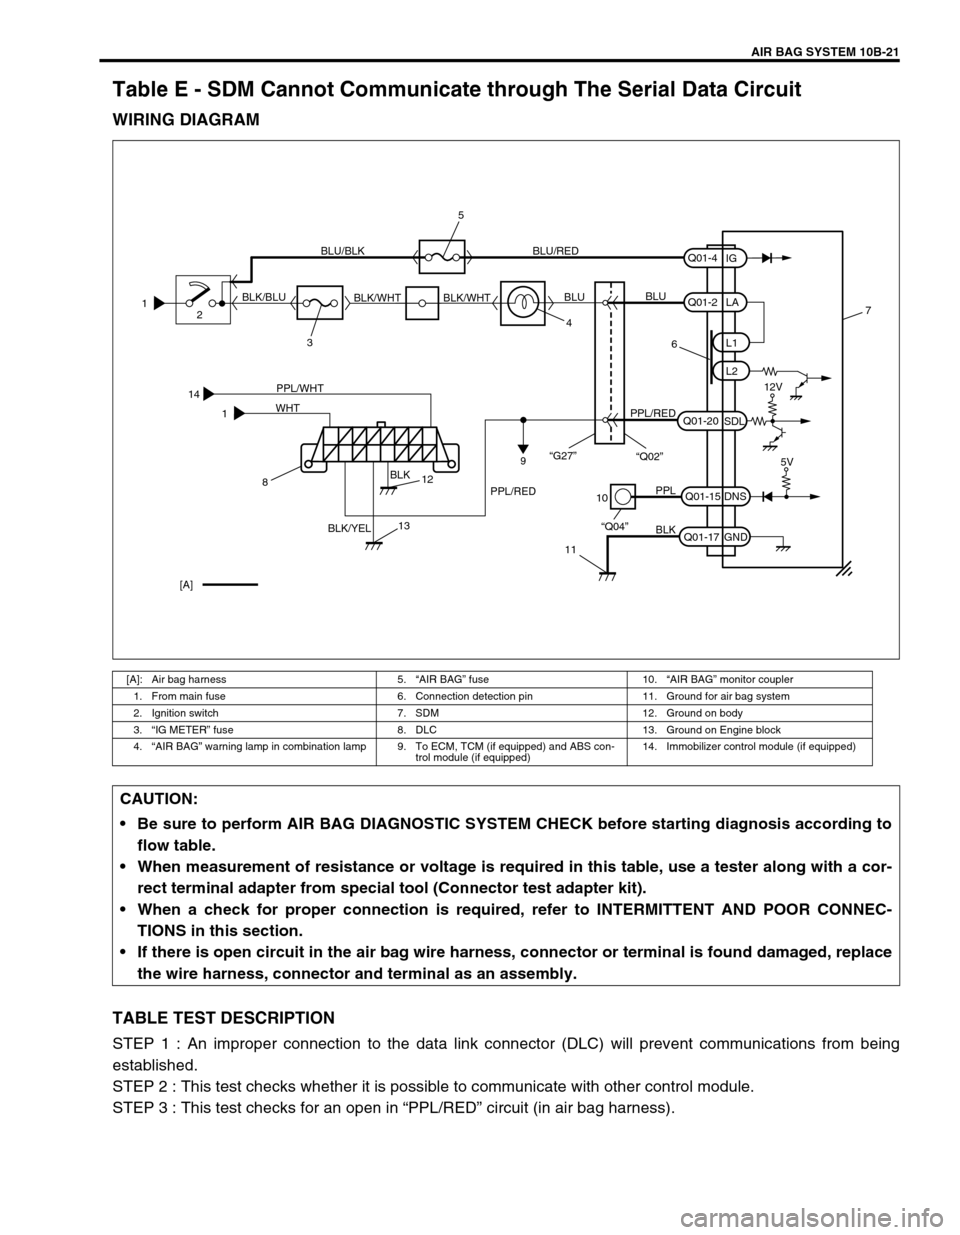 SUZUKI GRAND VITARA 2001 2.G Manual PDF AIR BAG SYSTEM 10B-21
Table E - SDM Cannot Communicate through The Serial Data Circuit
WIRING DIAGRAM
TABLE TEST DESCRIPTION
STEP 1 : An improper connection to the data link connector (DLC) will preve